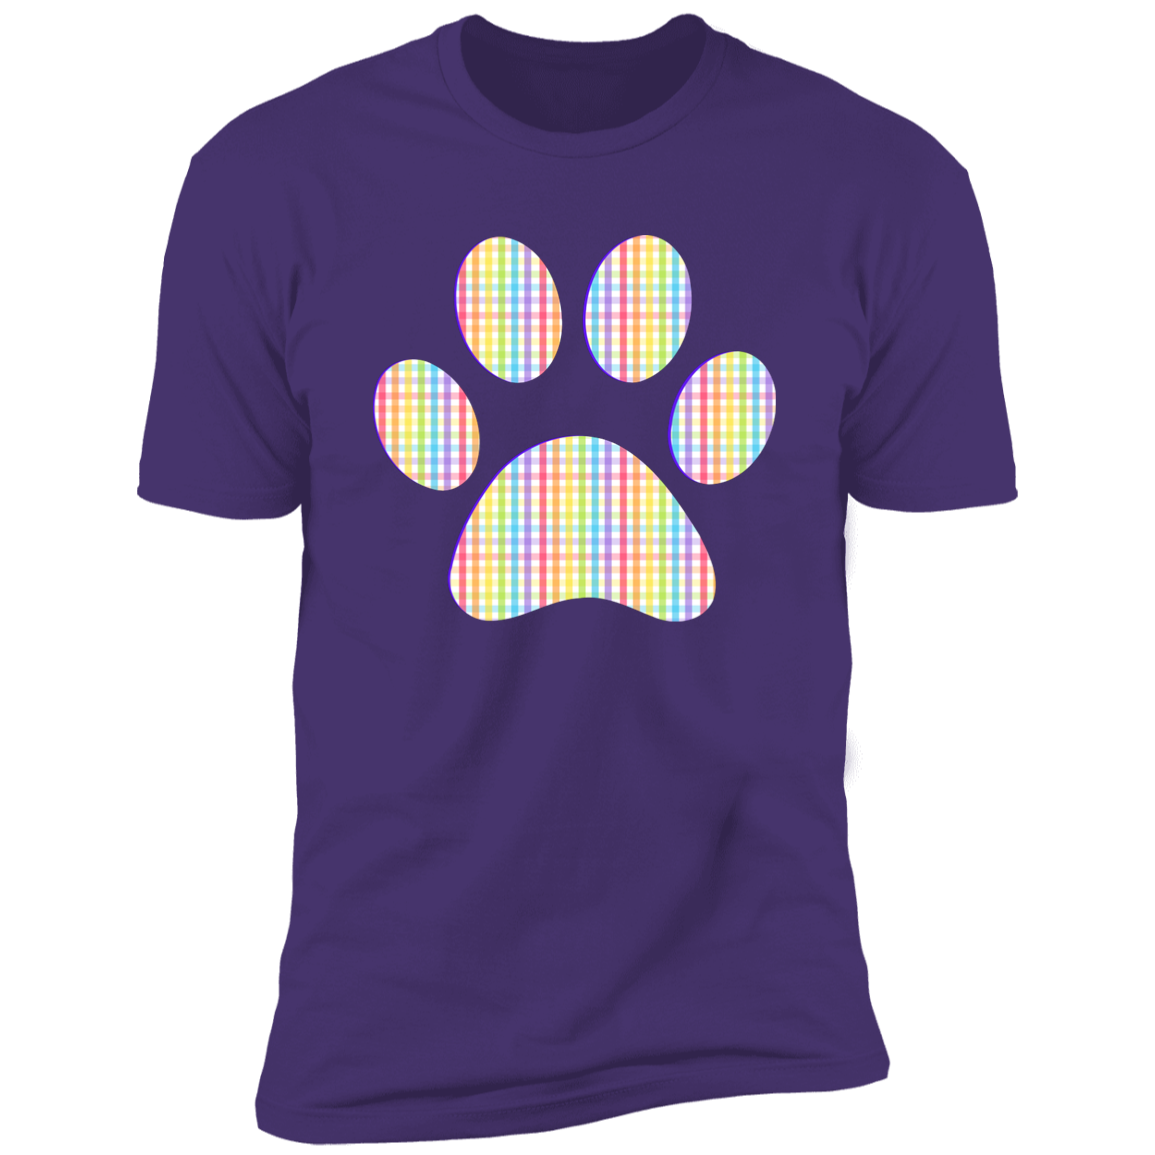 Pride Paw (Gingham) Pride T-shirt, Paw Pride Dog Shirt for humans, in purple rush